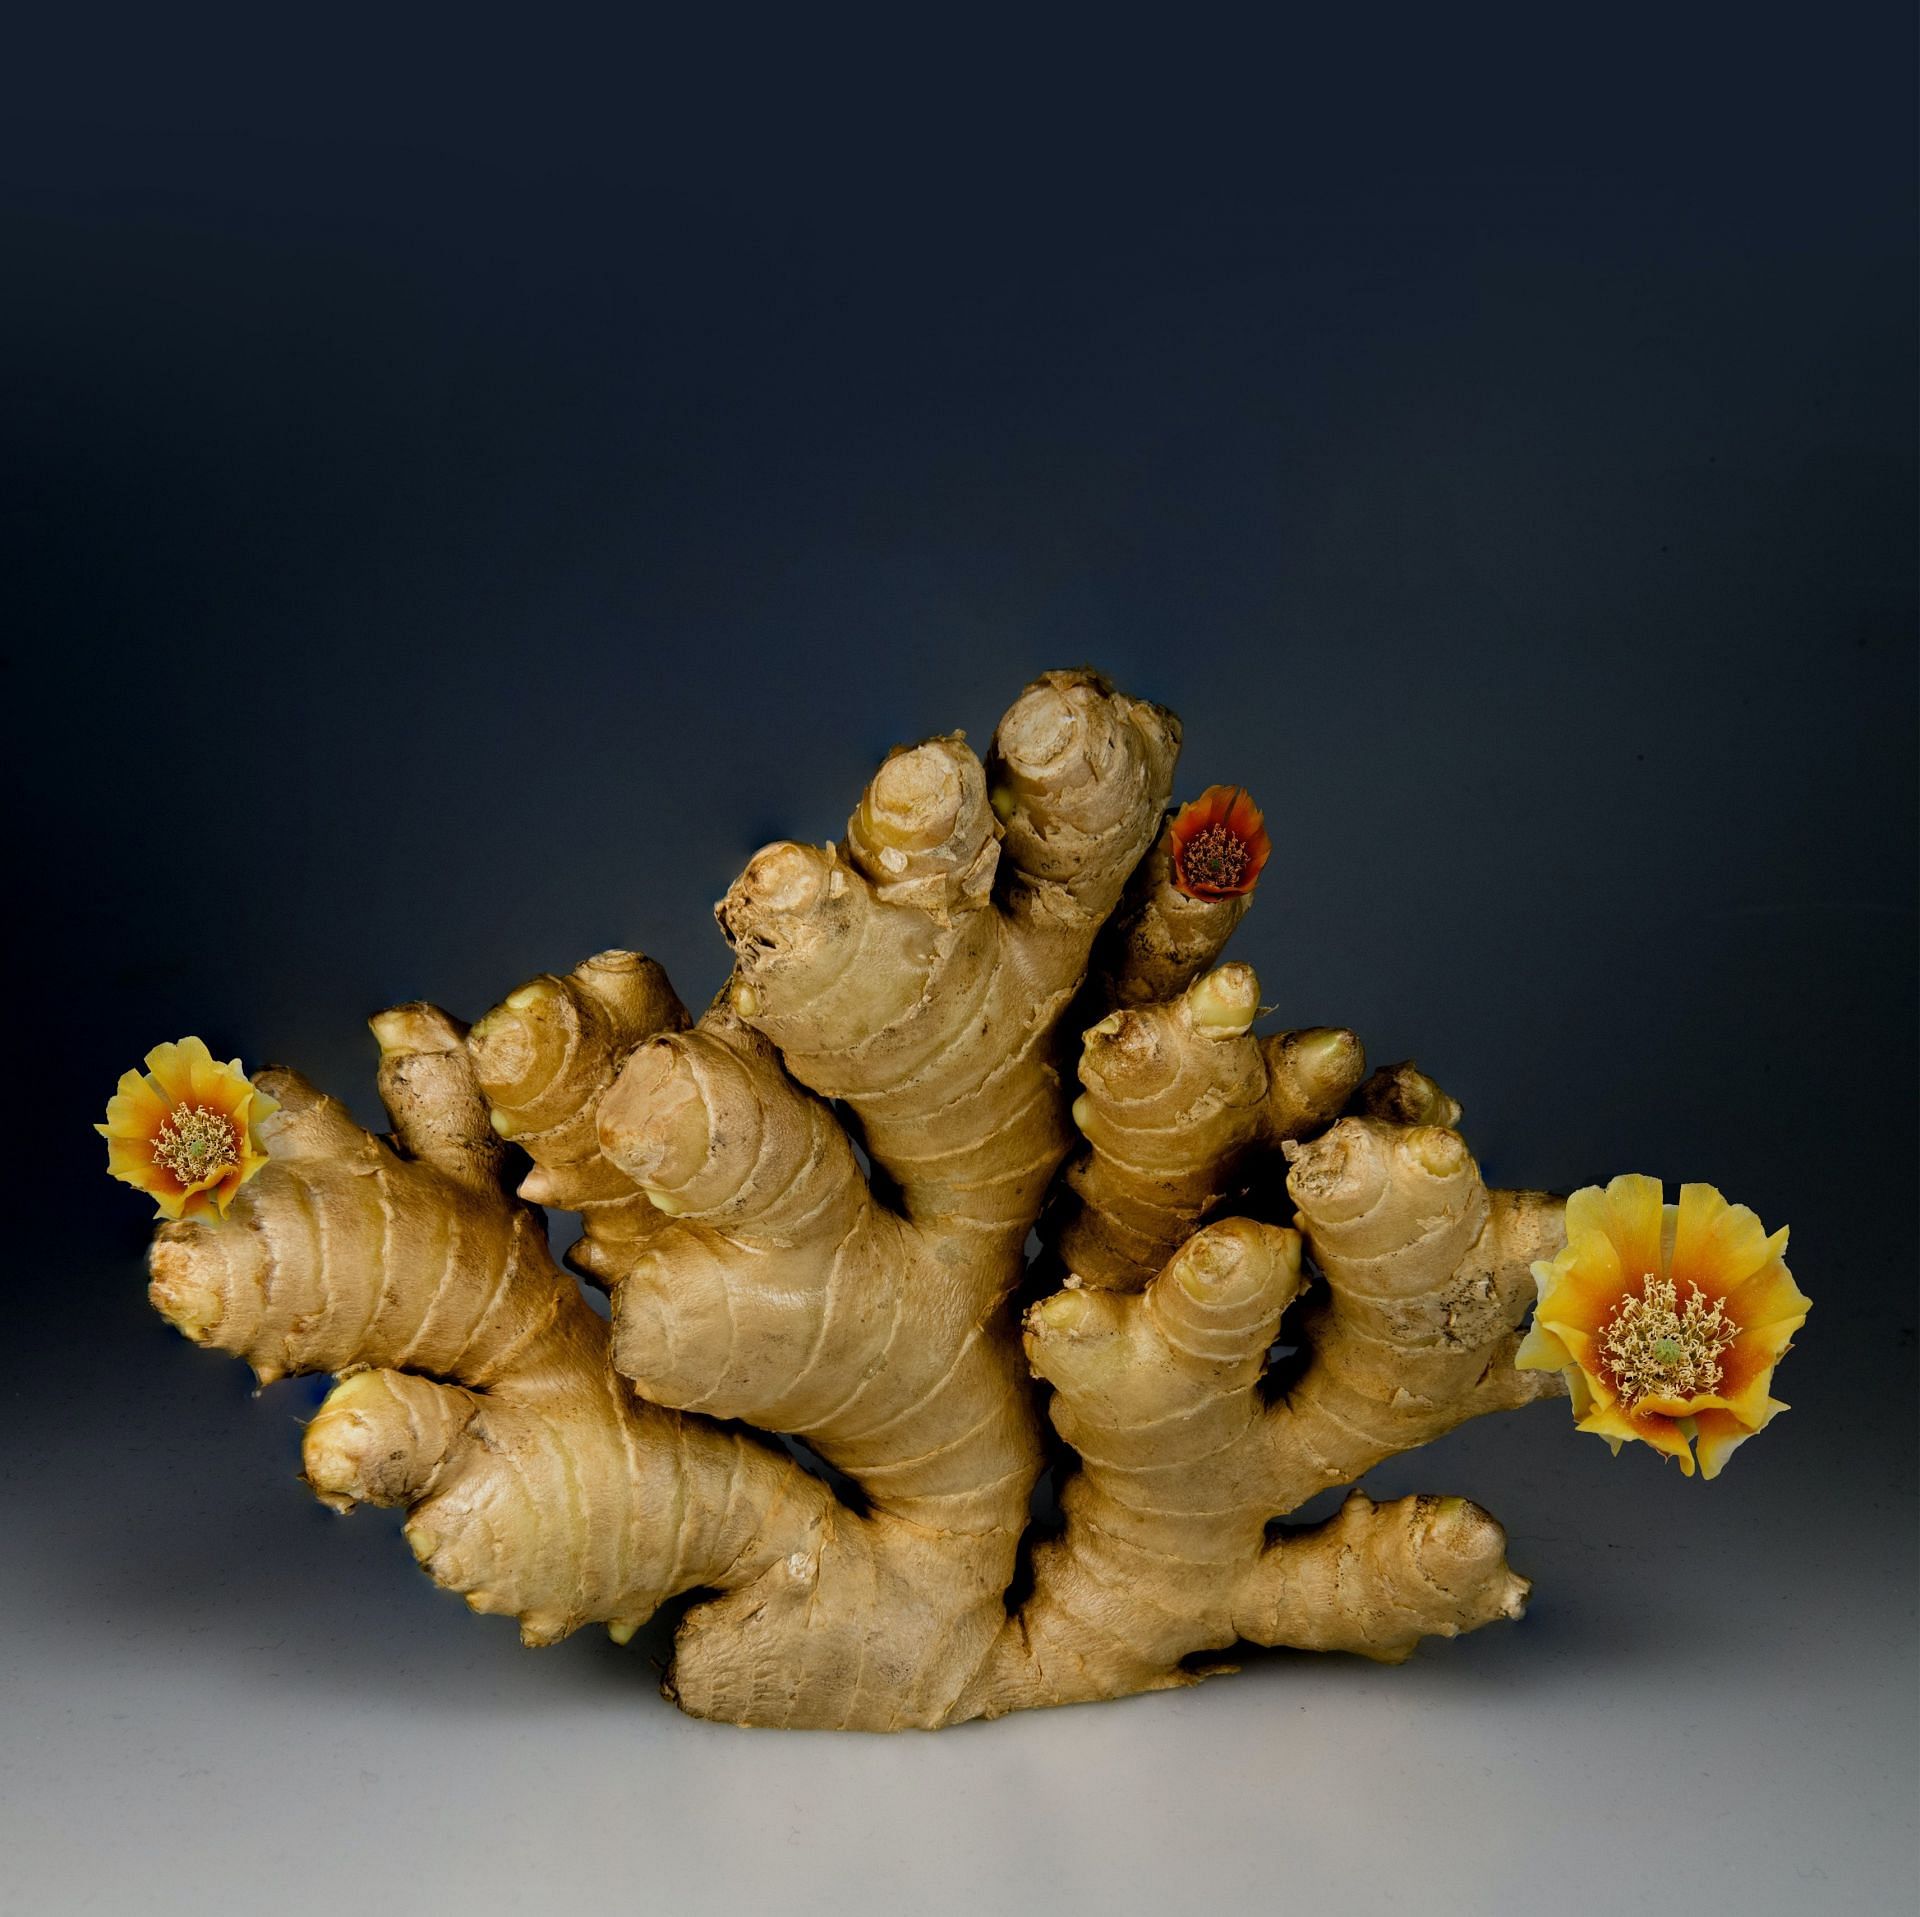 Numerous studies have shown ginger for nausea relief works well. (Image via Pexels/ Joris Neyt)